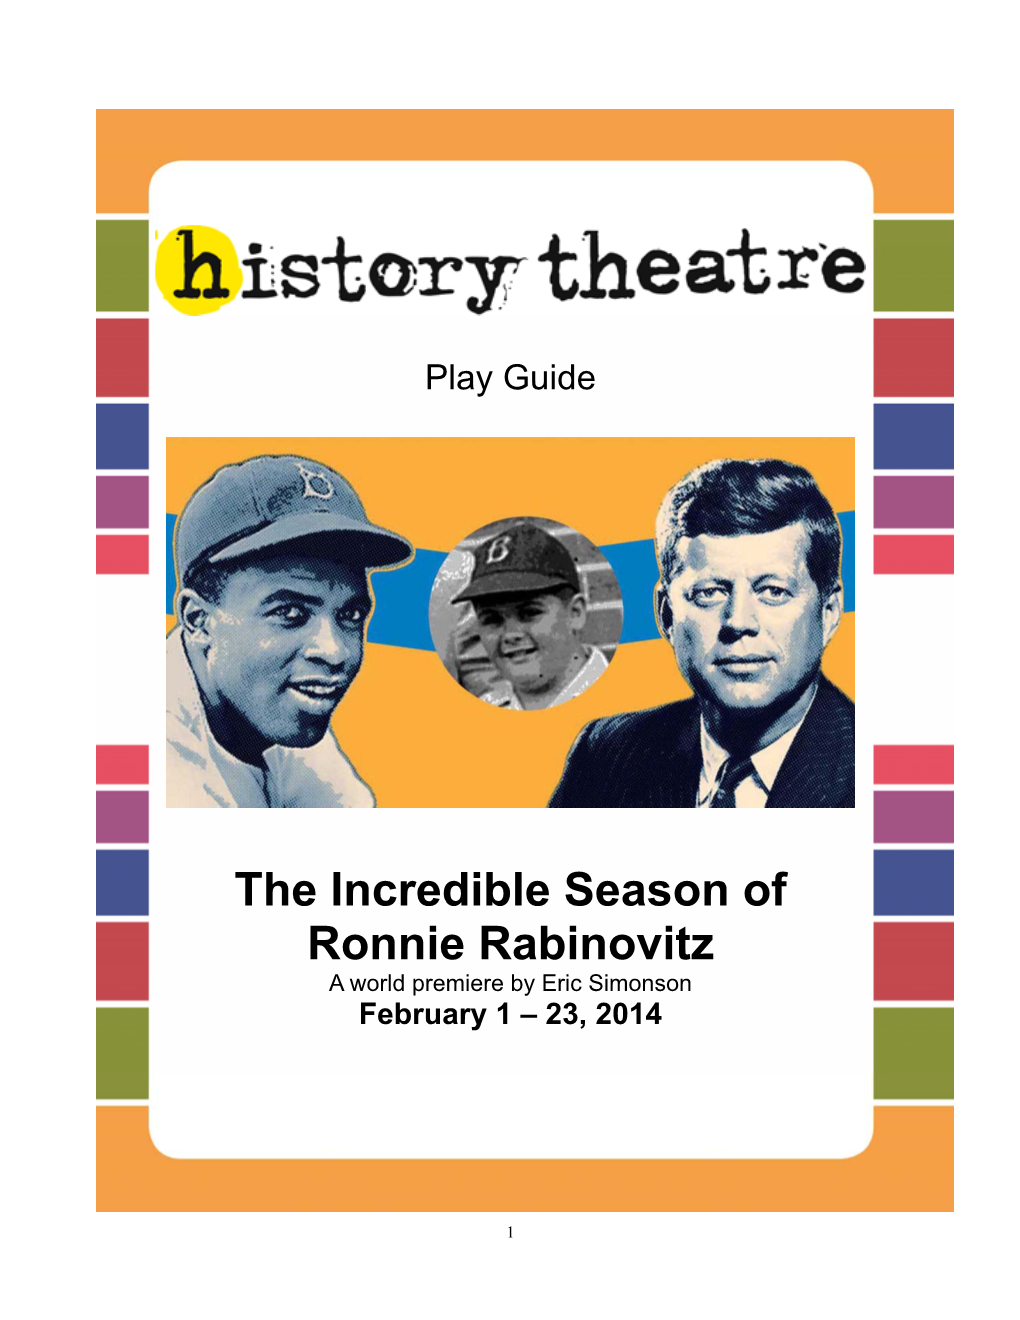 Play Guide for the Incredible Season of Ronnie Rabinovitz